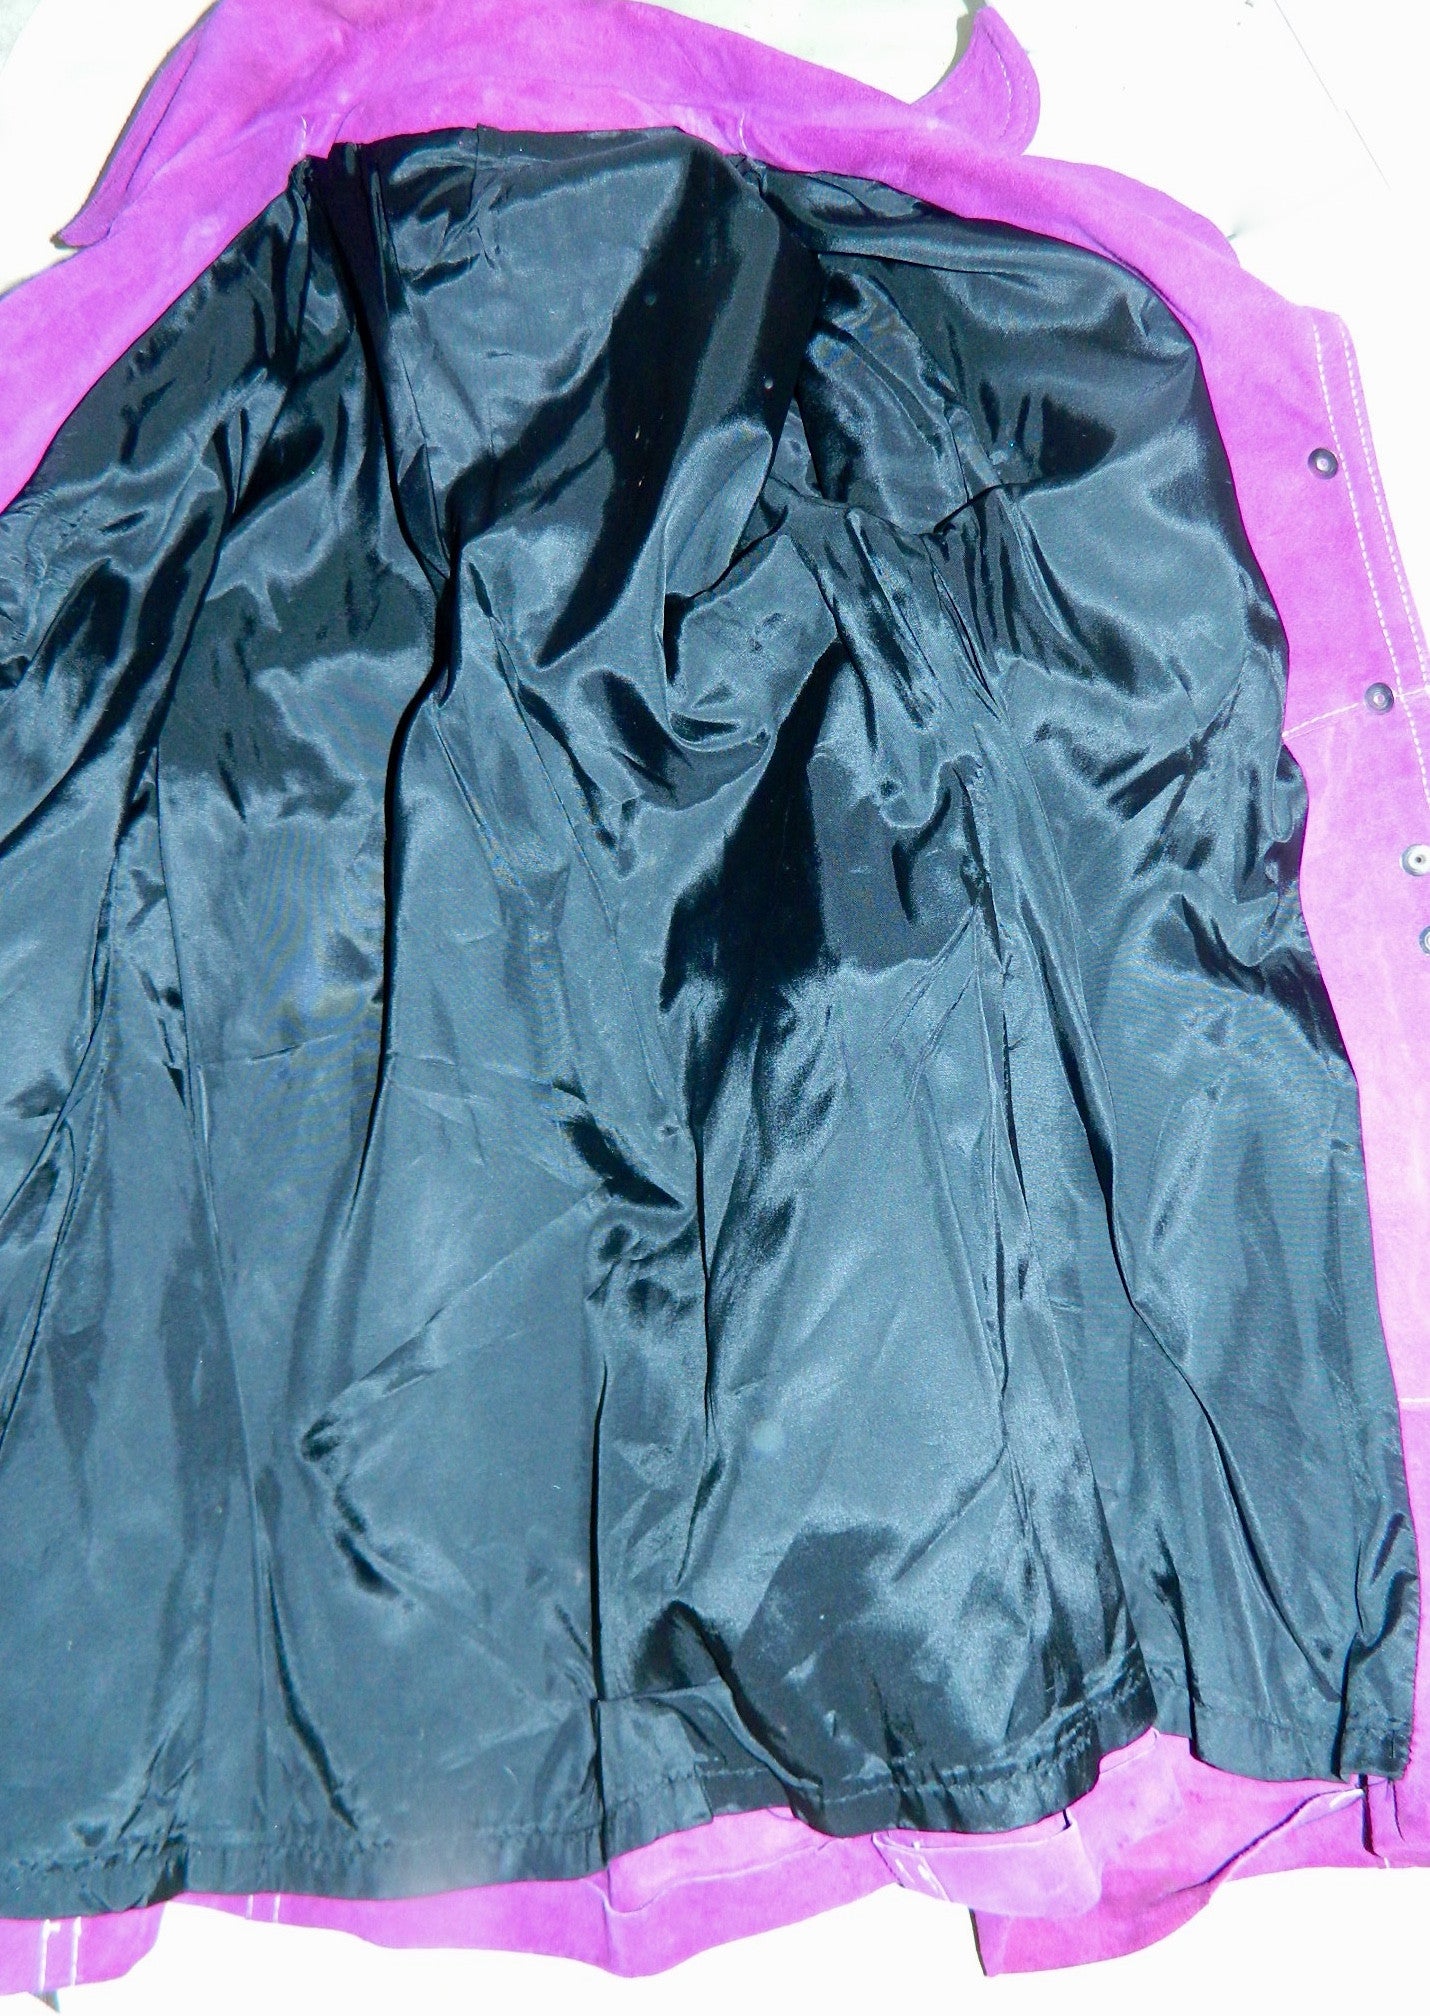 vintage 1960s violet suede car coat MOD contrast stitch jacket XS- Small